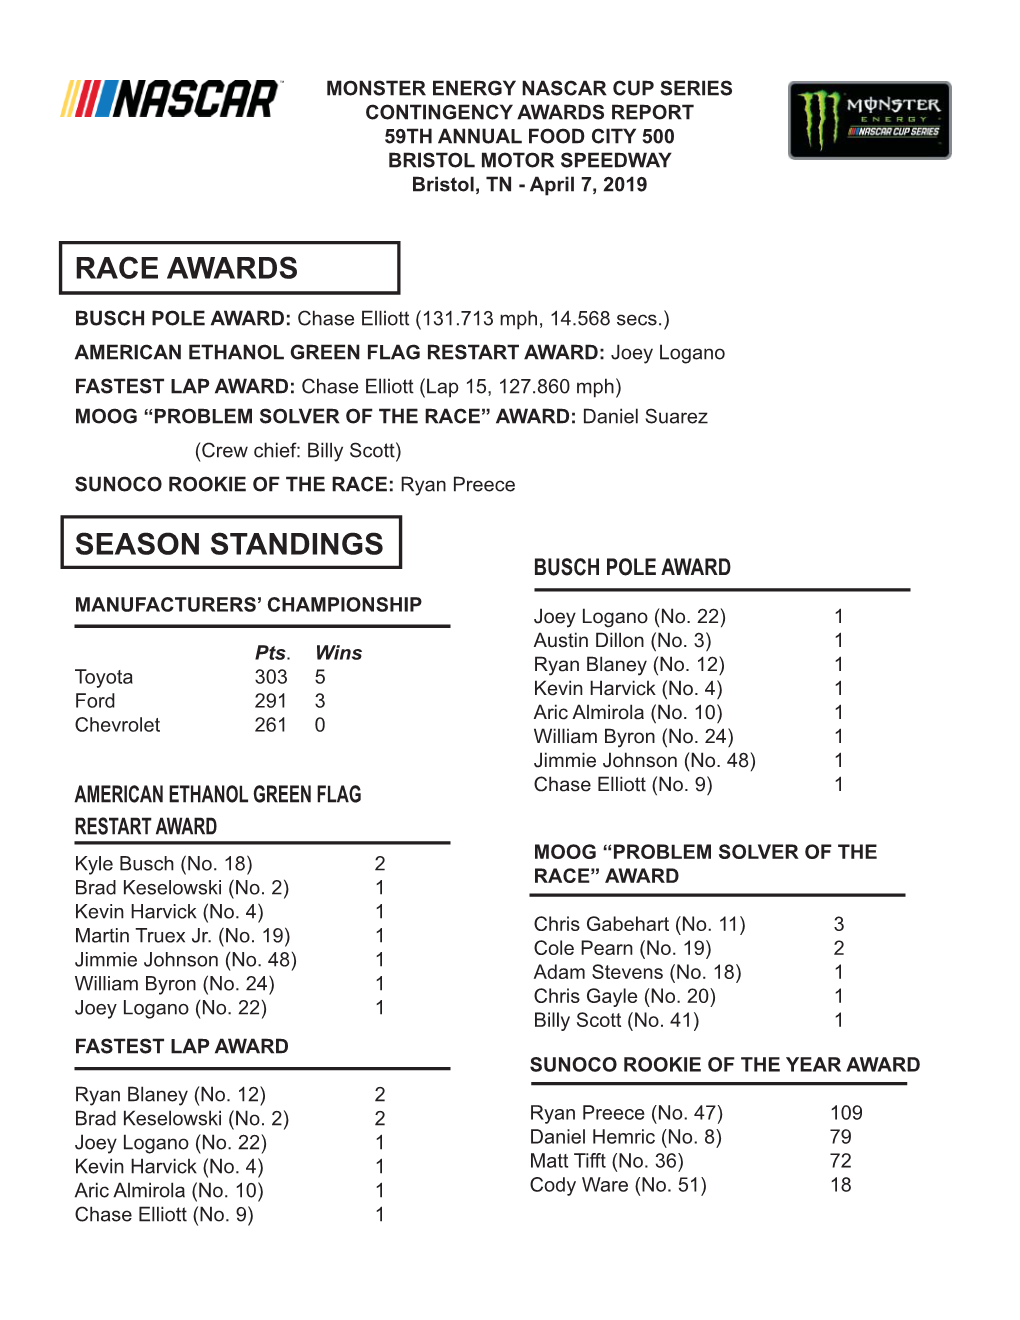 Race Awards Season Standings